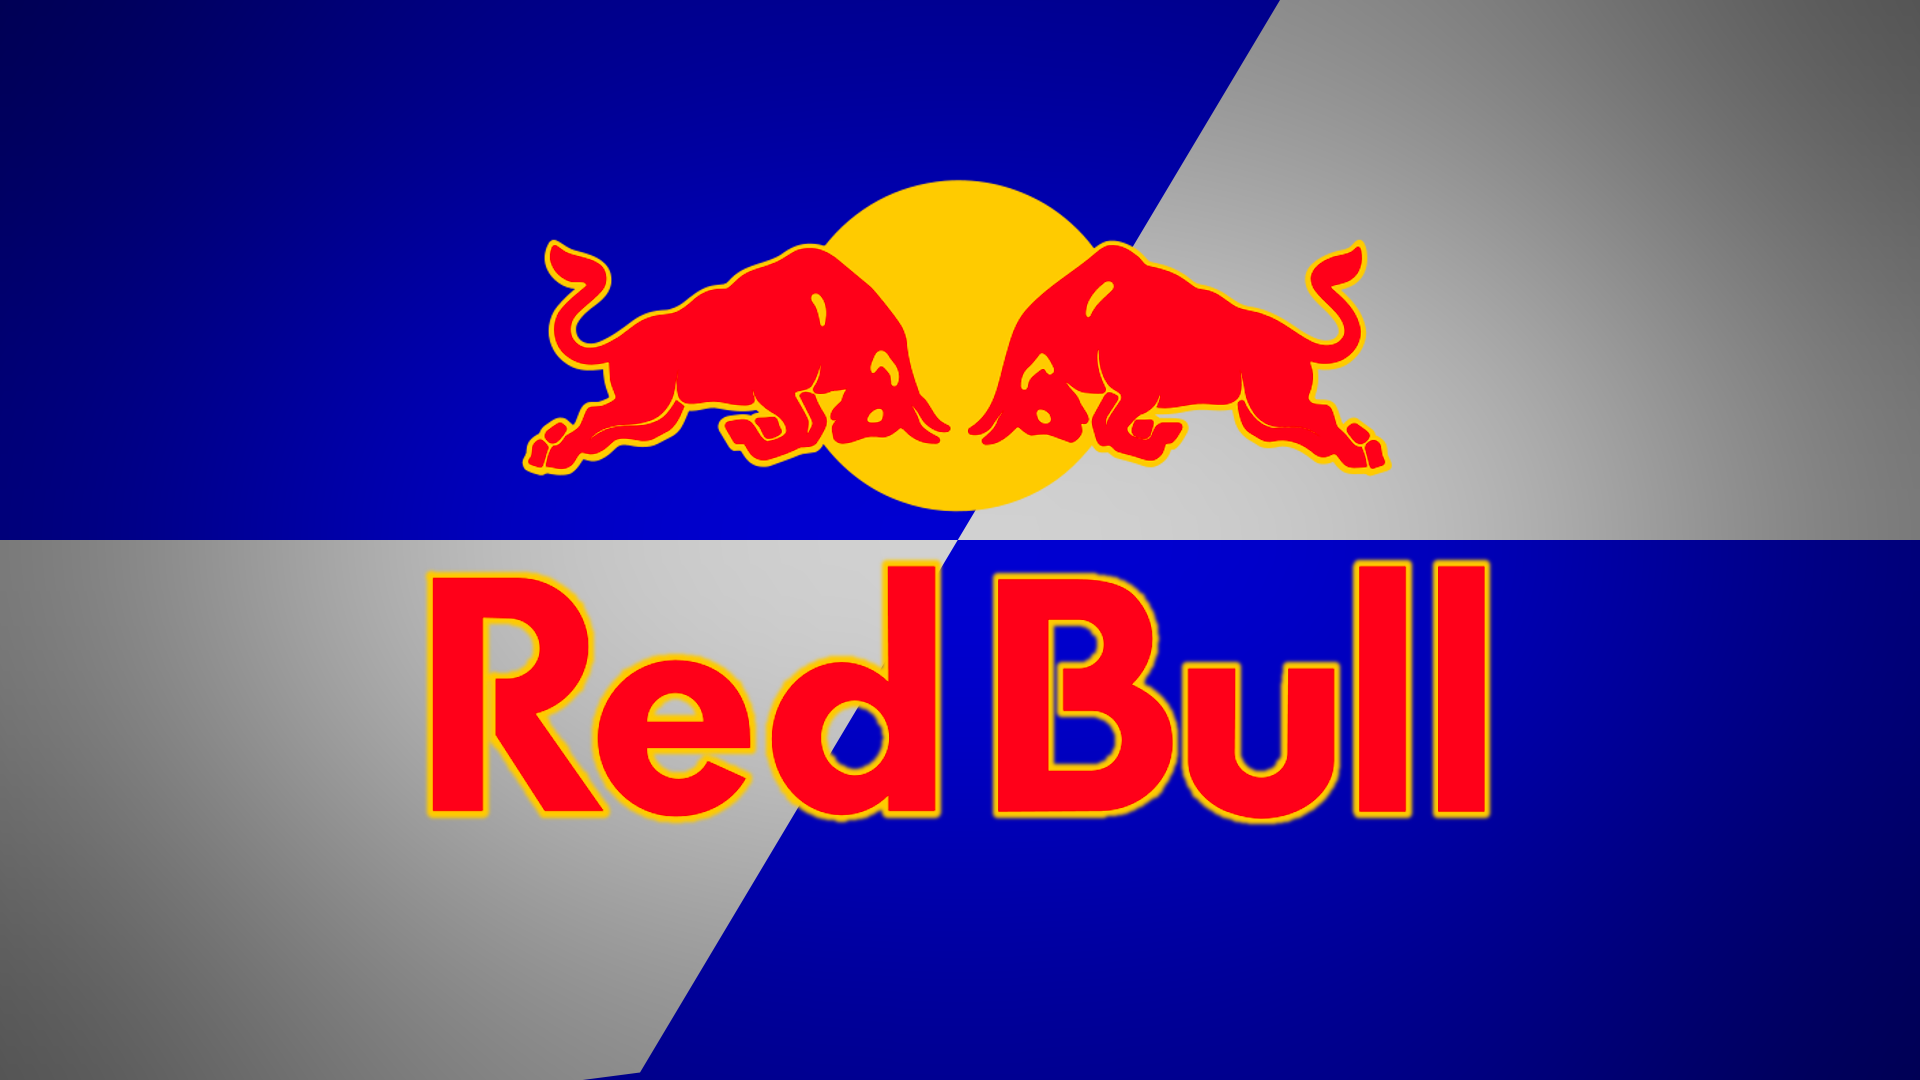 Red Bull Symbol Wallpaper